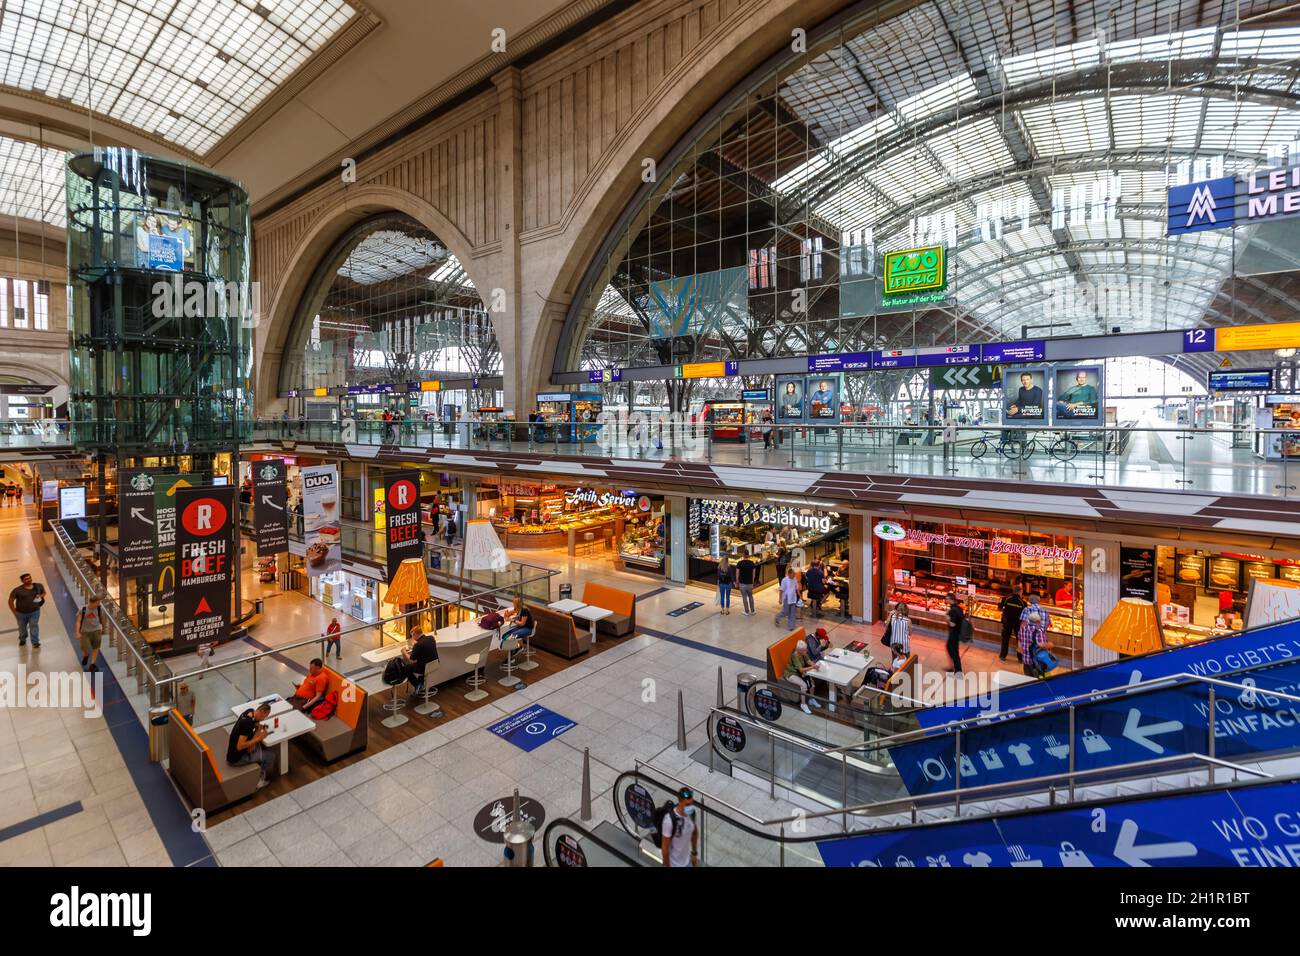 Leipzig, Germany - August 19, 2020: Leipzig main railway station Hauptbahnhof Hbf Deutsche Bahn DB hall shops in Germany. Stock Photo